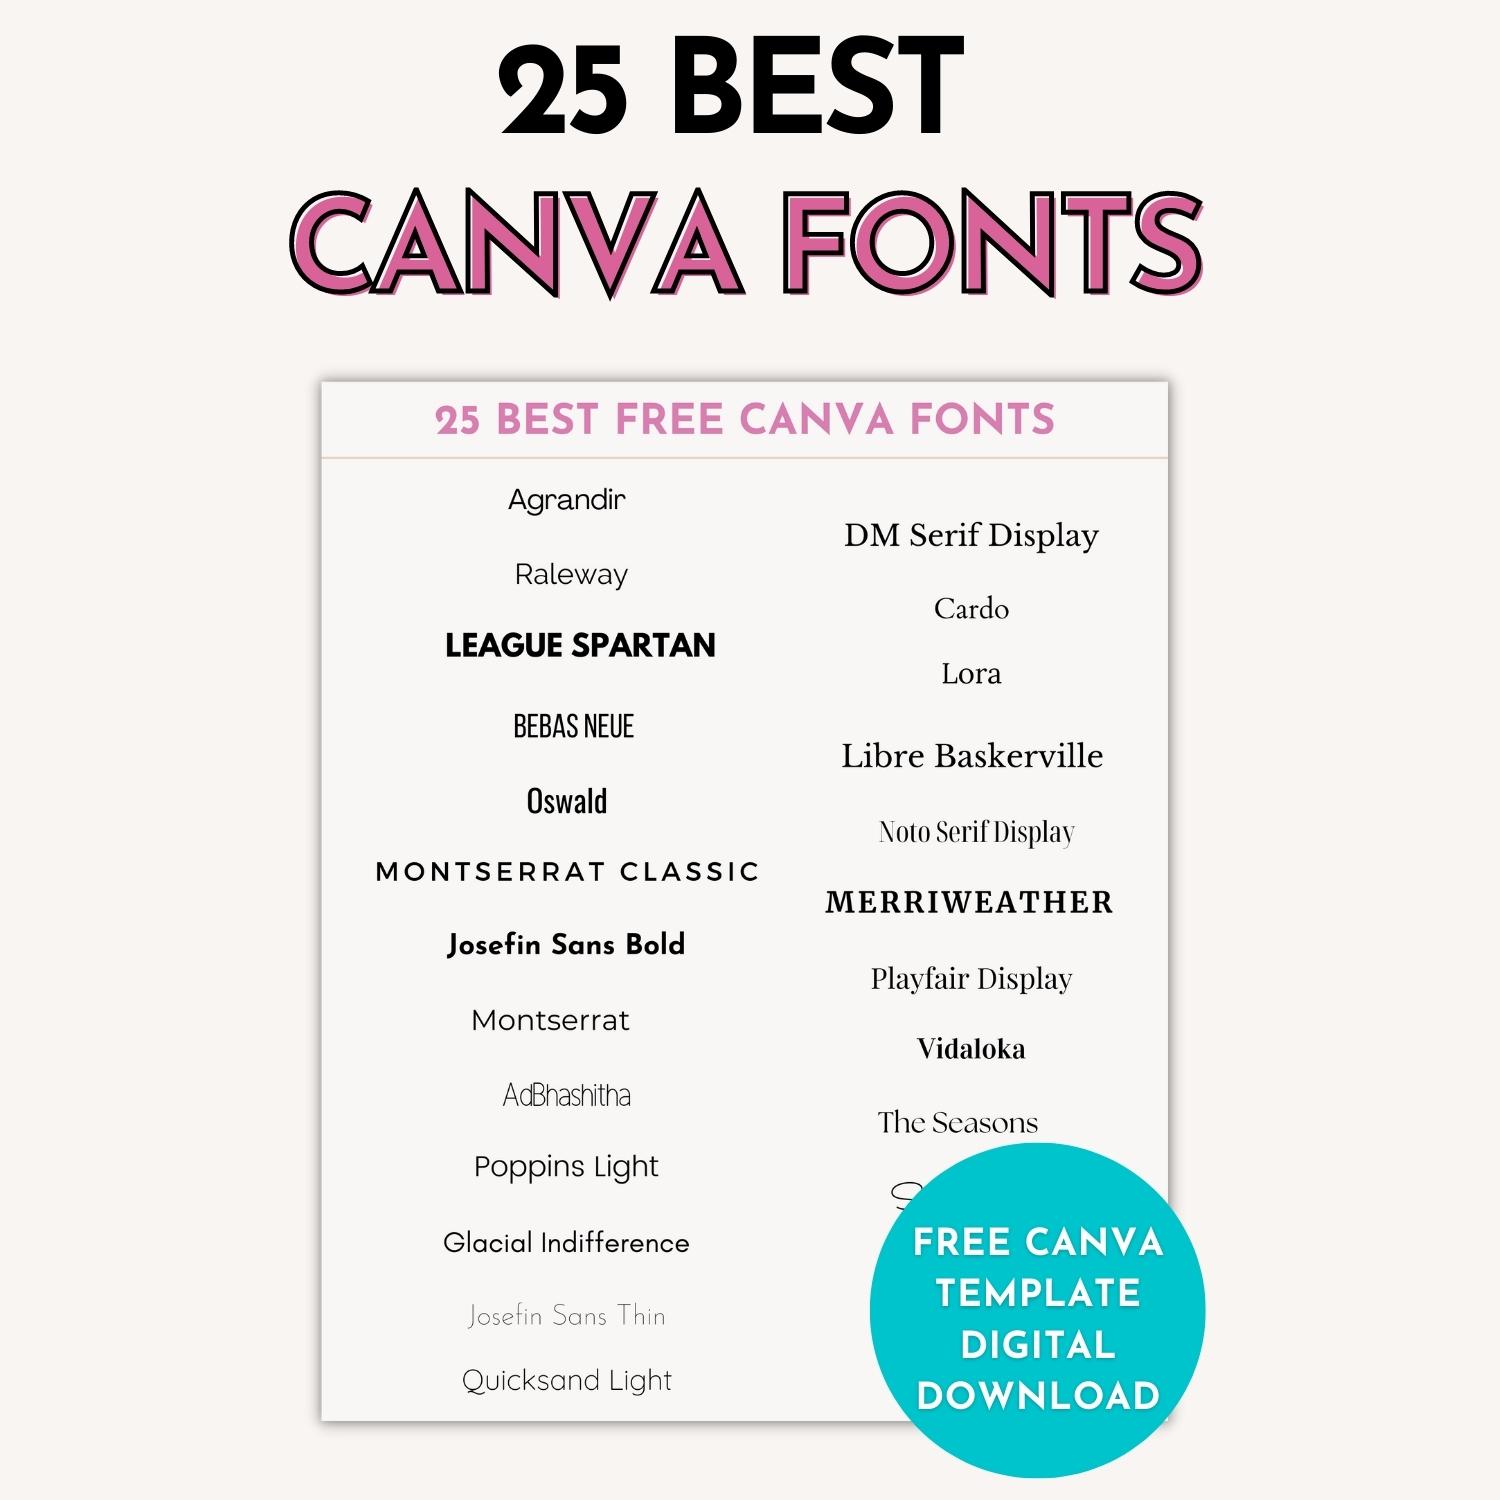 best canva fonts list, free canva fonts download, canva template download